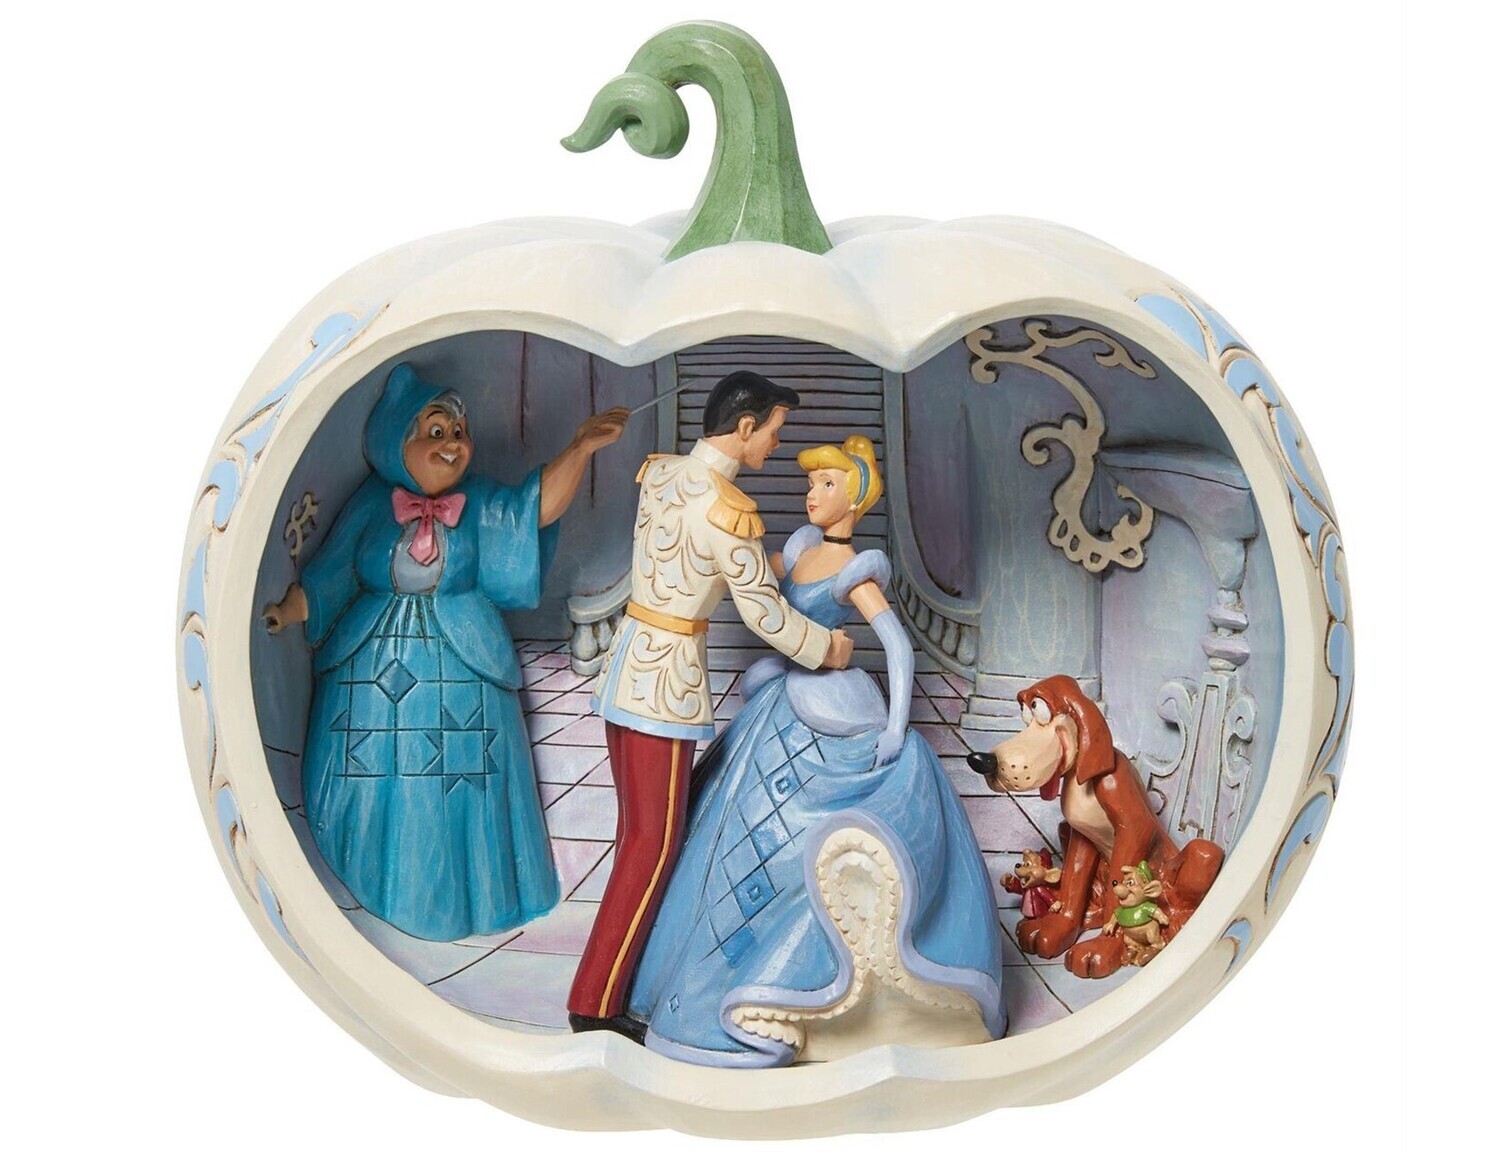 Jim Shore Disney Traditions "Love at First Sight" Cinderella in a Pumpkin Figurine (6011926)